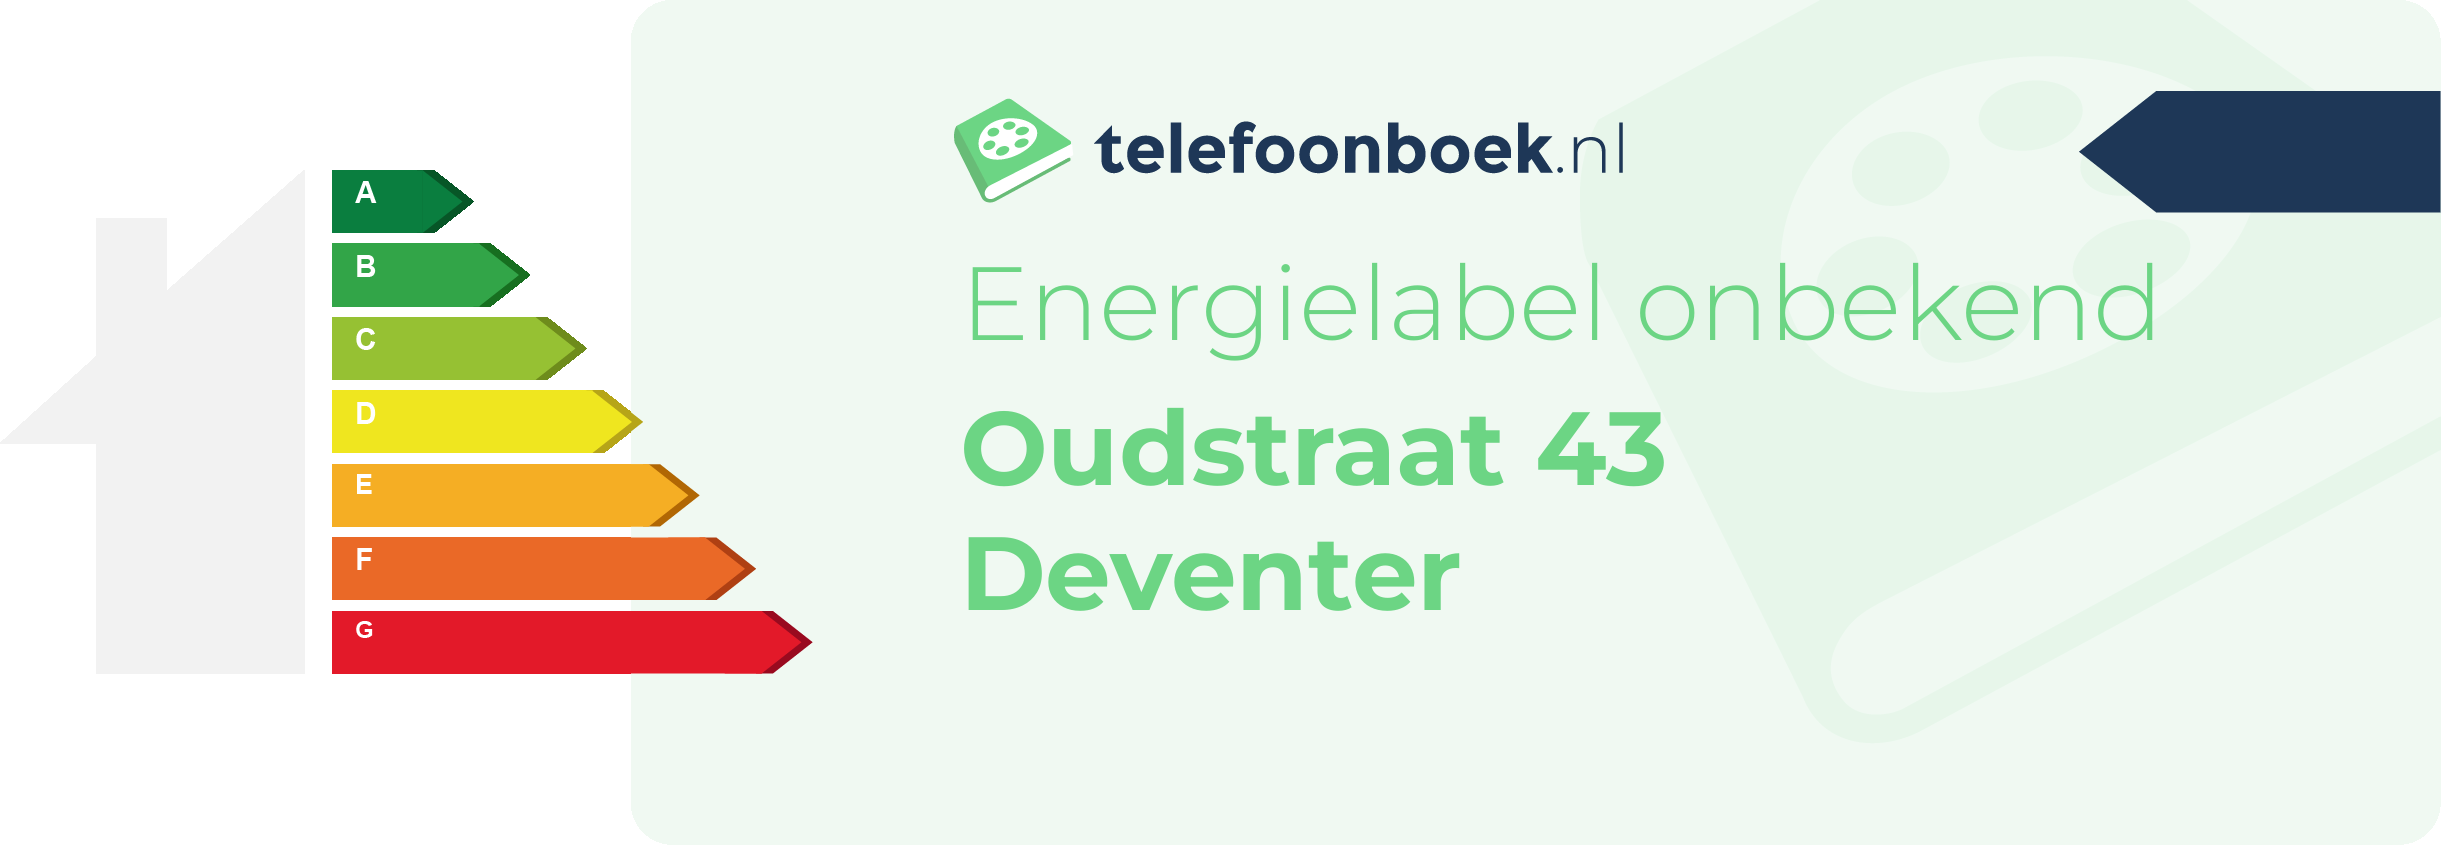 Energielabel Oudstraat 43 Deventer